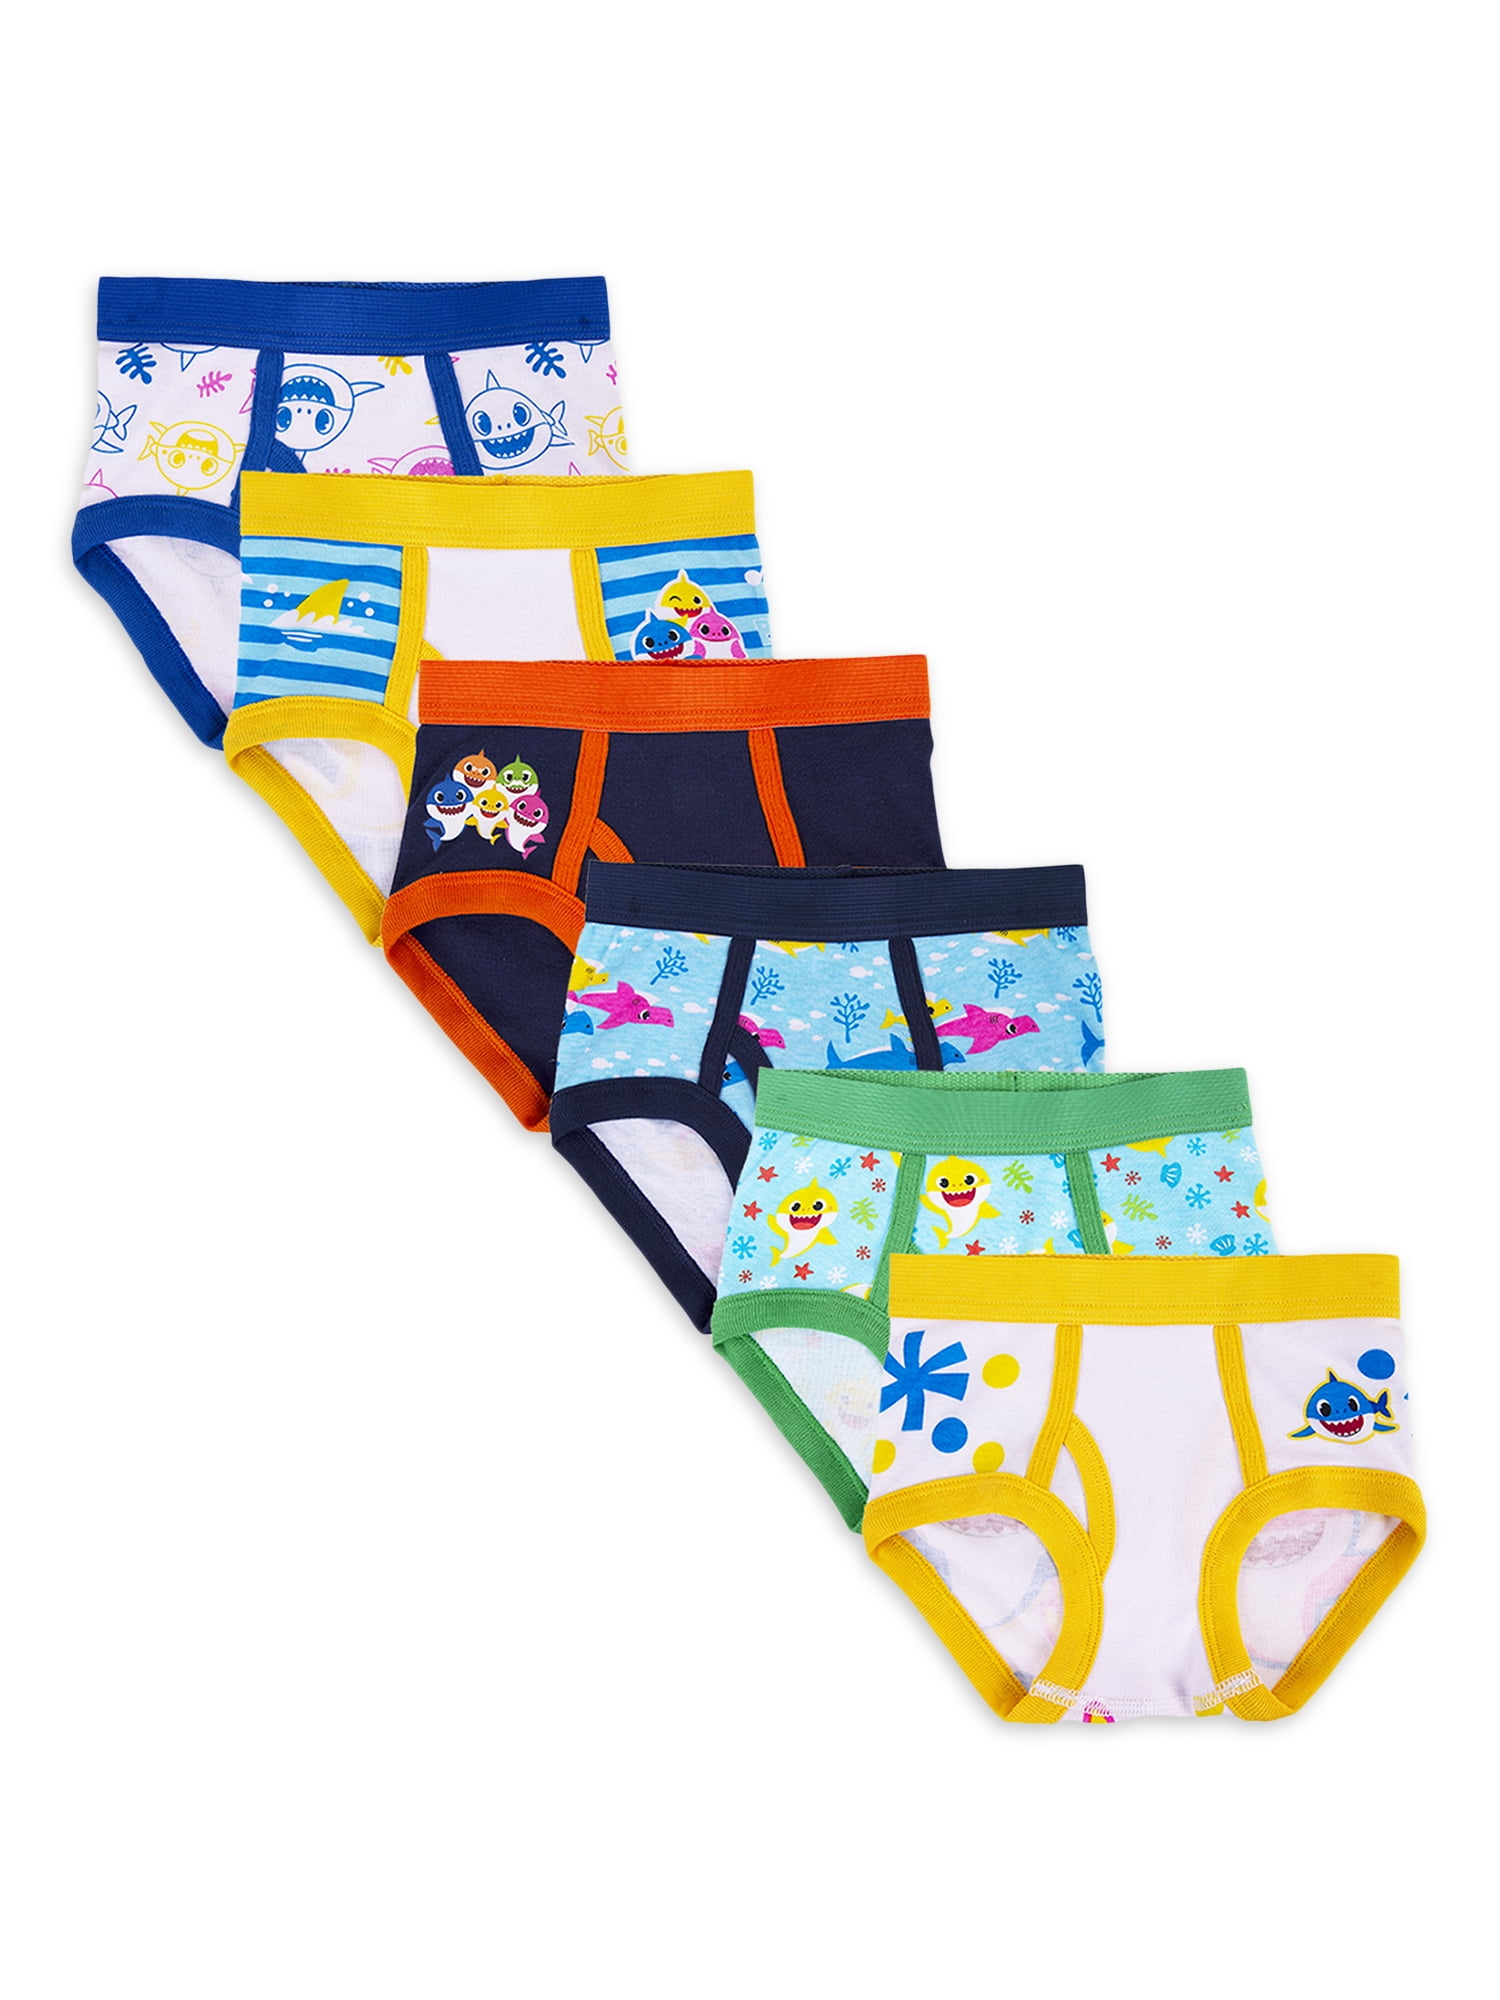 Baby Shark Toddler Boys' Underwear, 6 Pack Sizes 2T-4T - Walmart.com